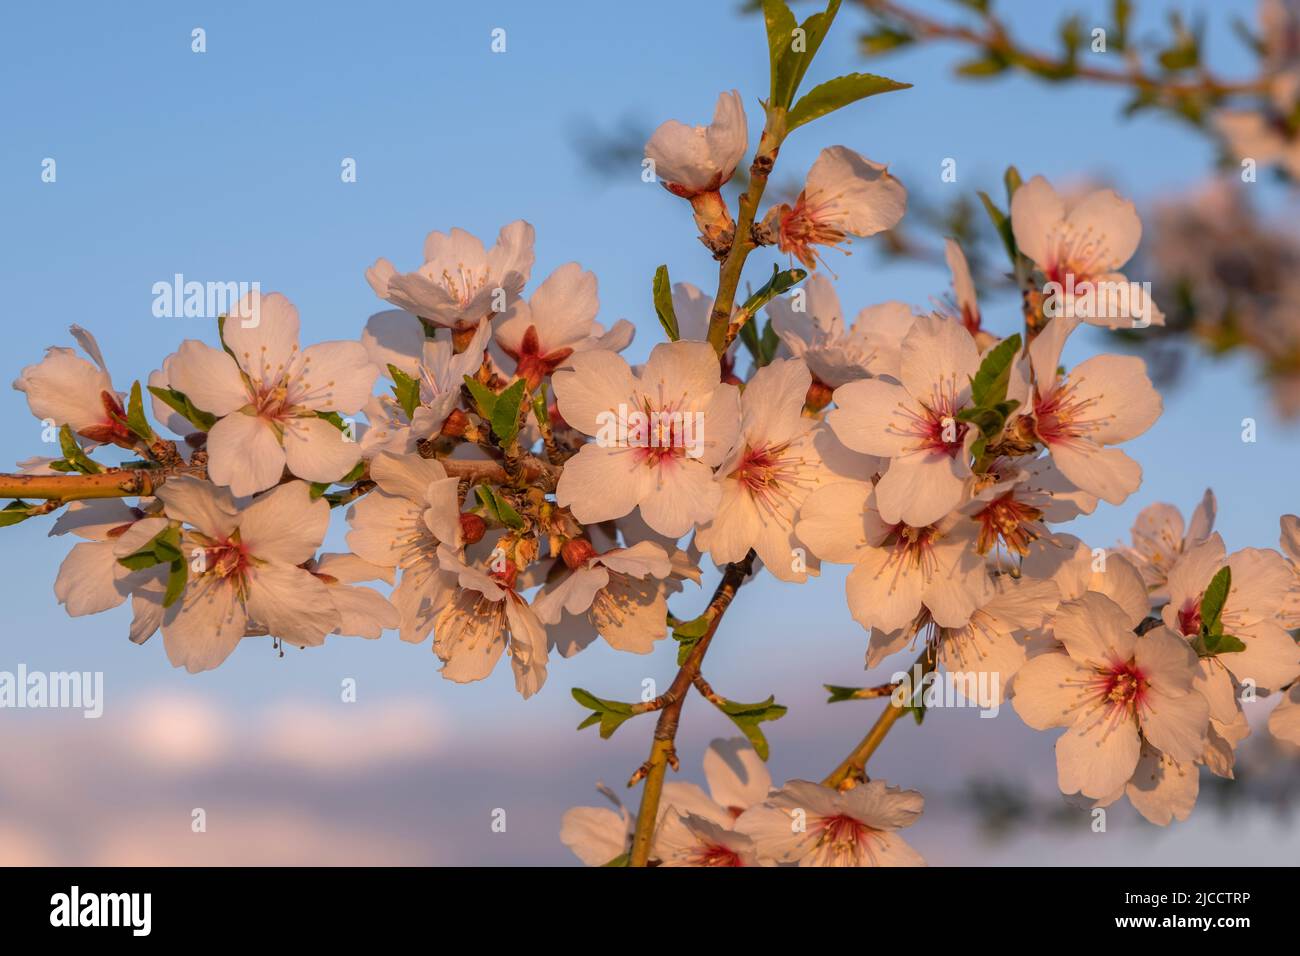 Almond tree (Prunus dulcis) blooming flowers Stock Photo